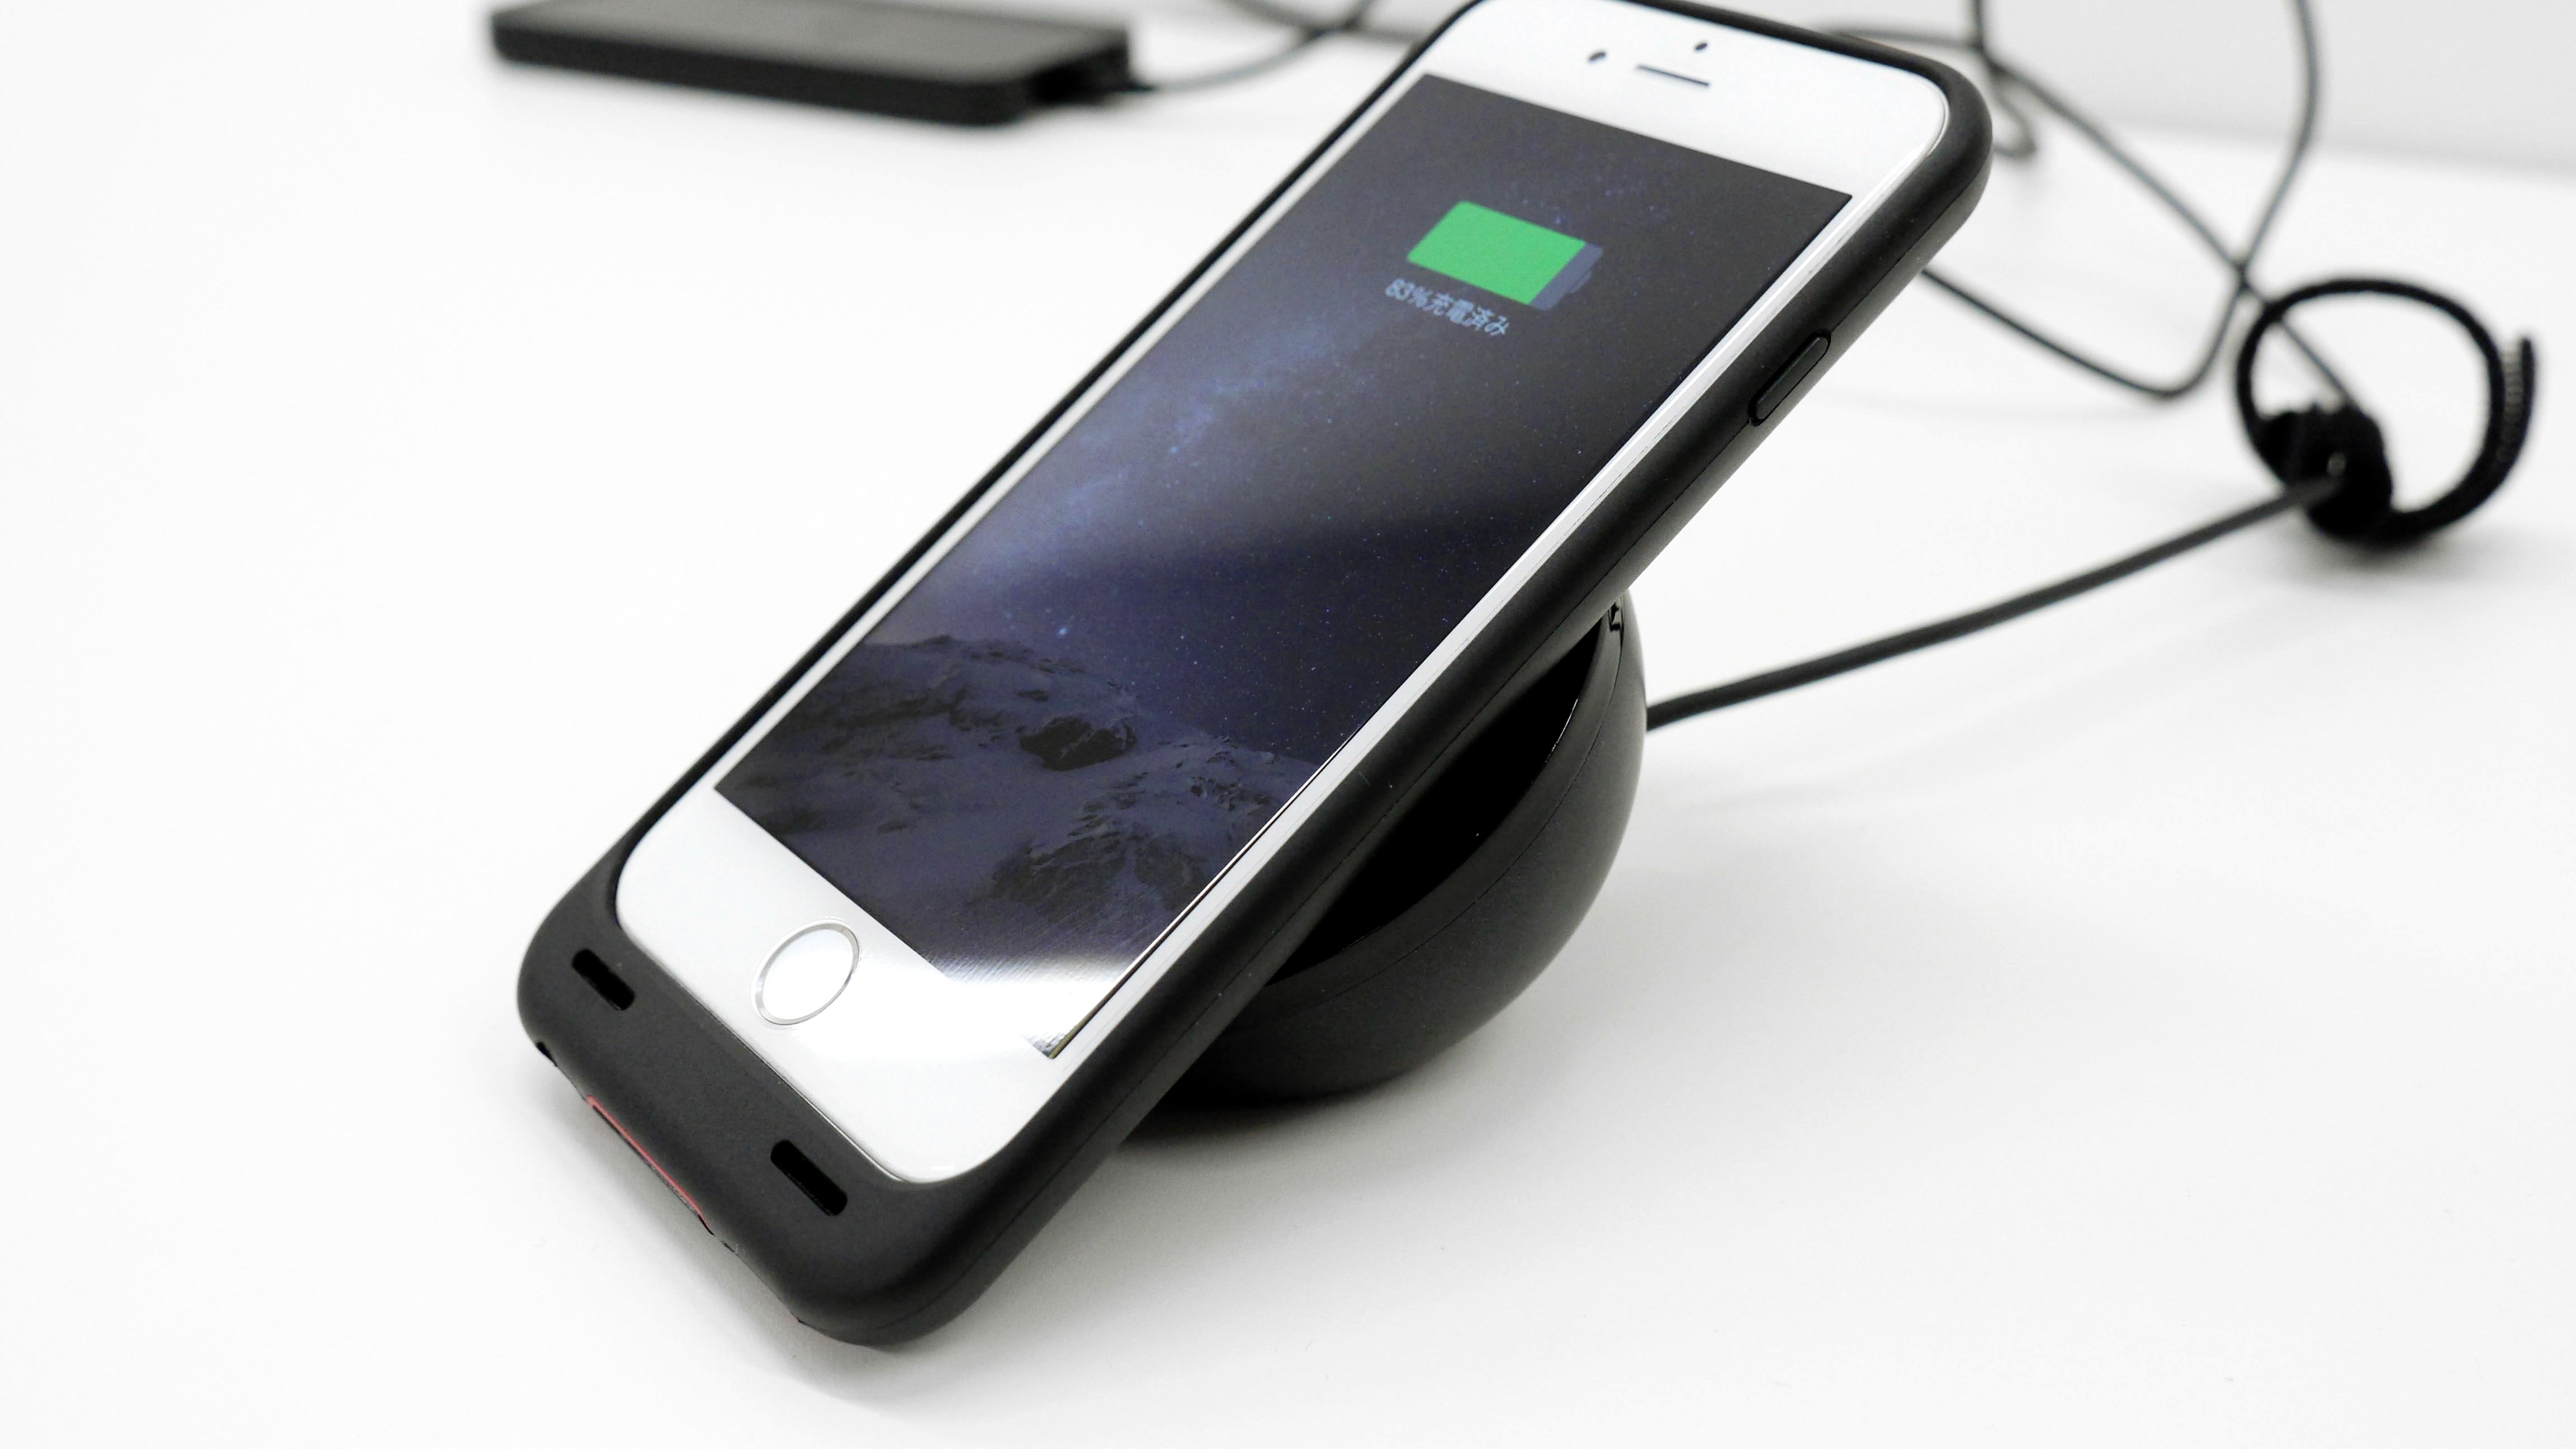 iPhoneをポンと置くだけで充電可能な耐衝撃ケース「Backbone Wireless Charging Case」を使ってみた